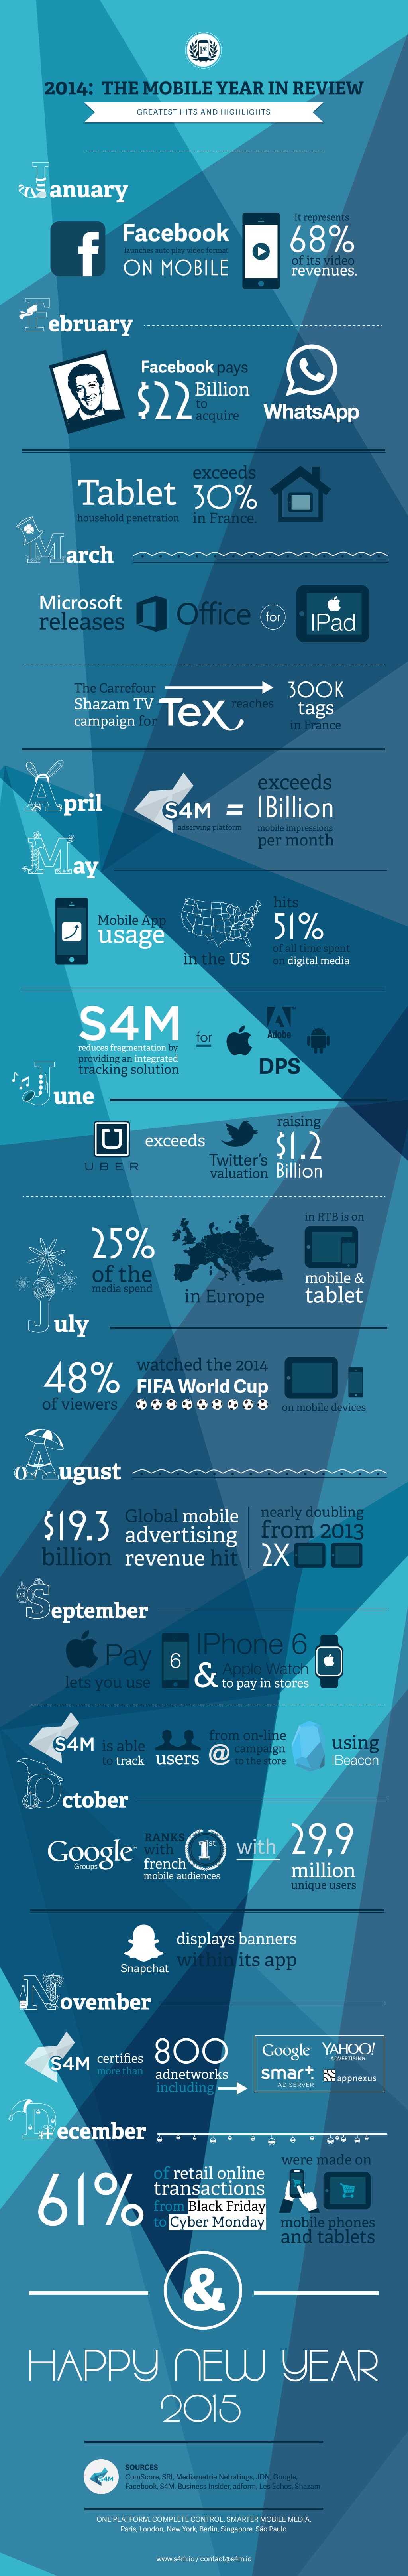 infographie-2014-annee-du-mobile